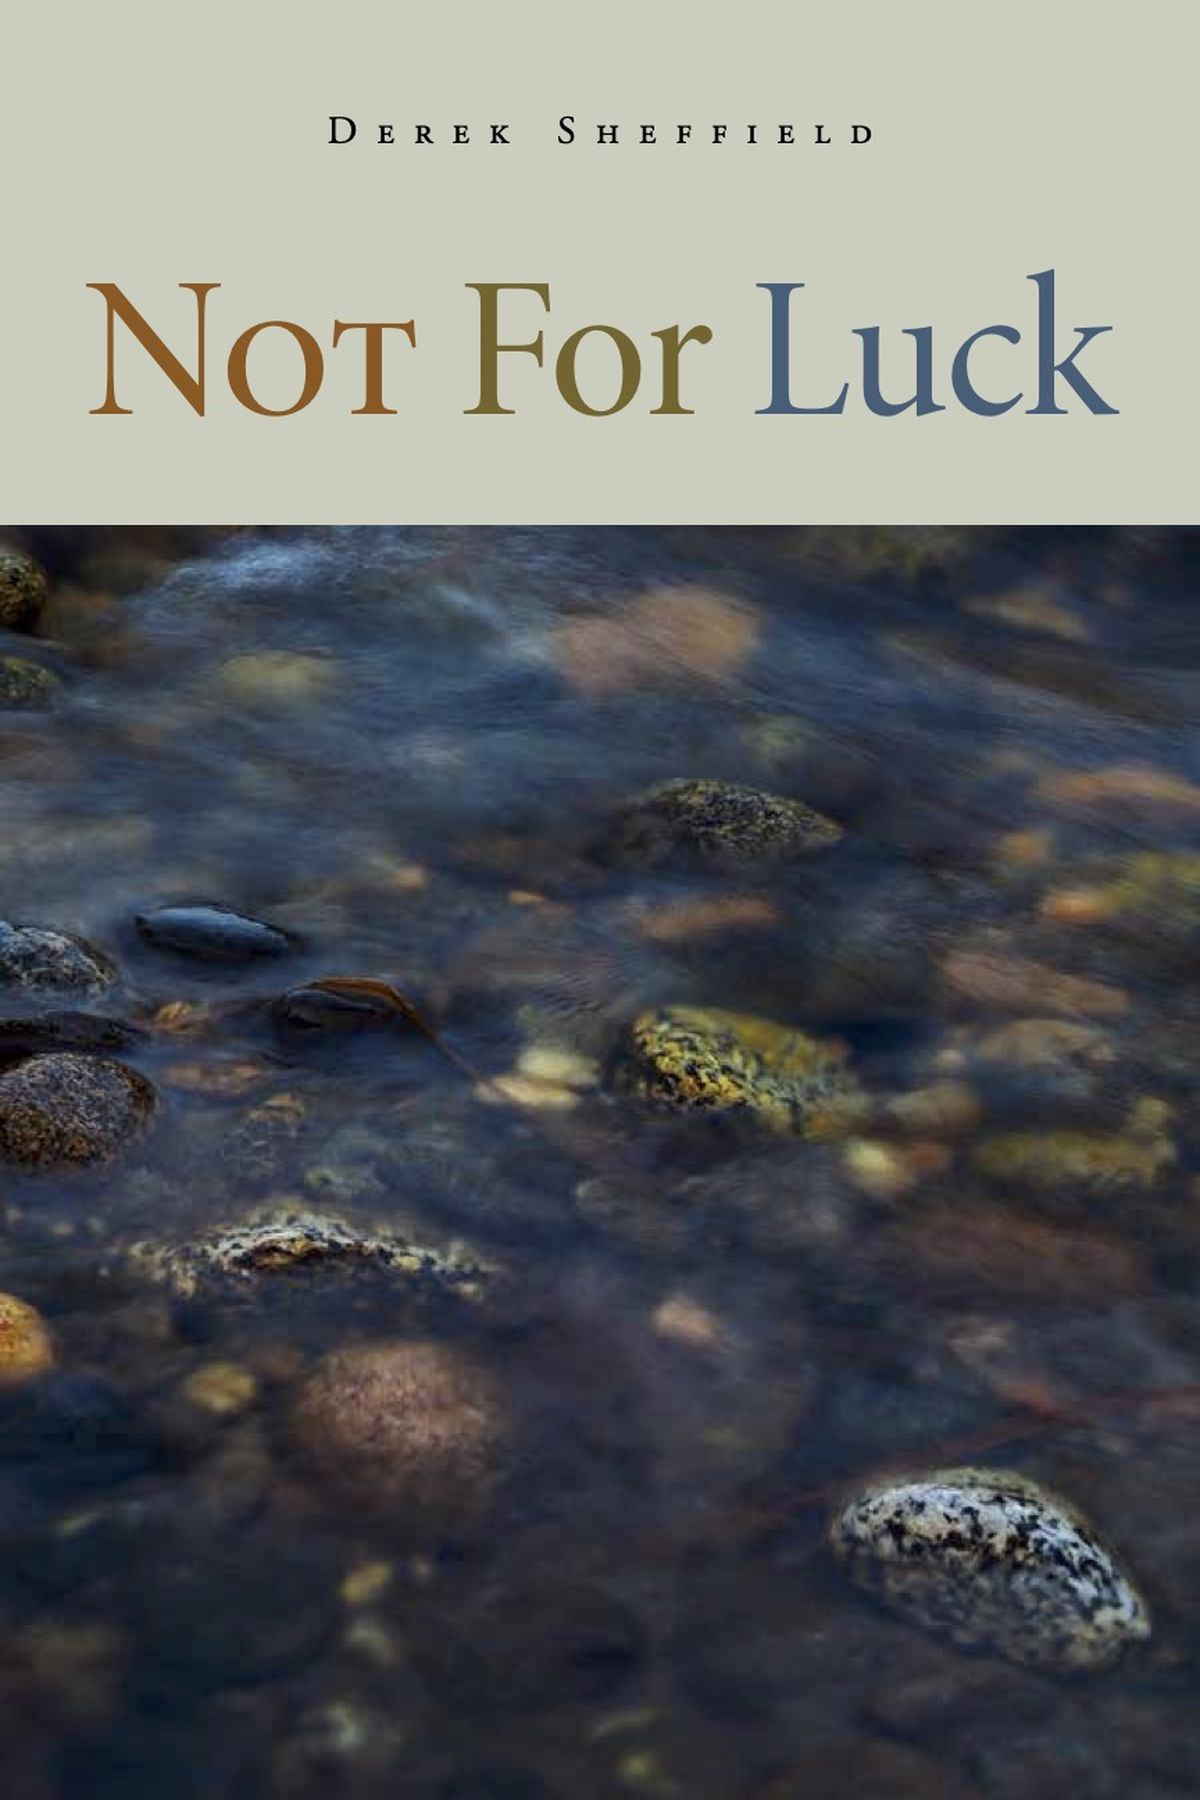 “Not for Luck” by Derek Sheffield  (Courtesy)